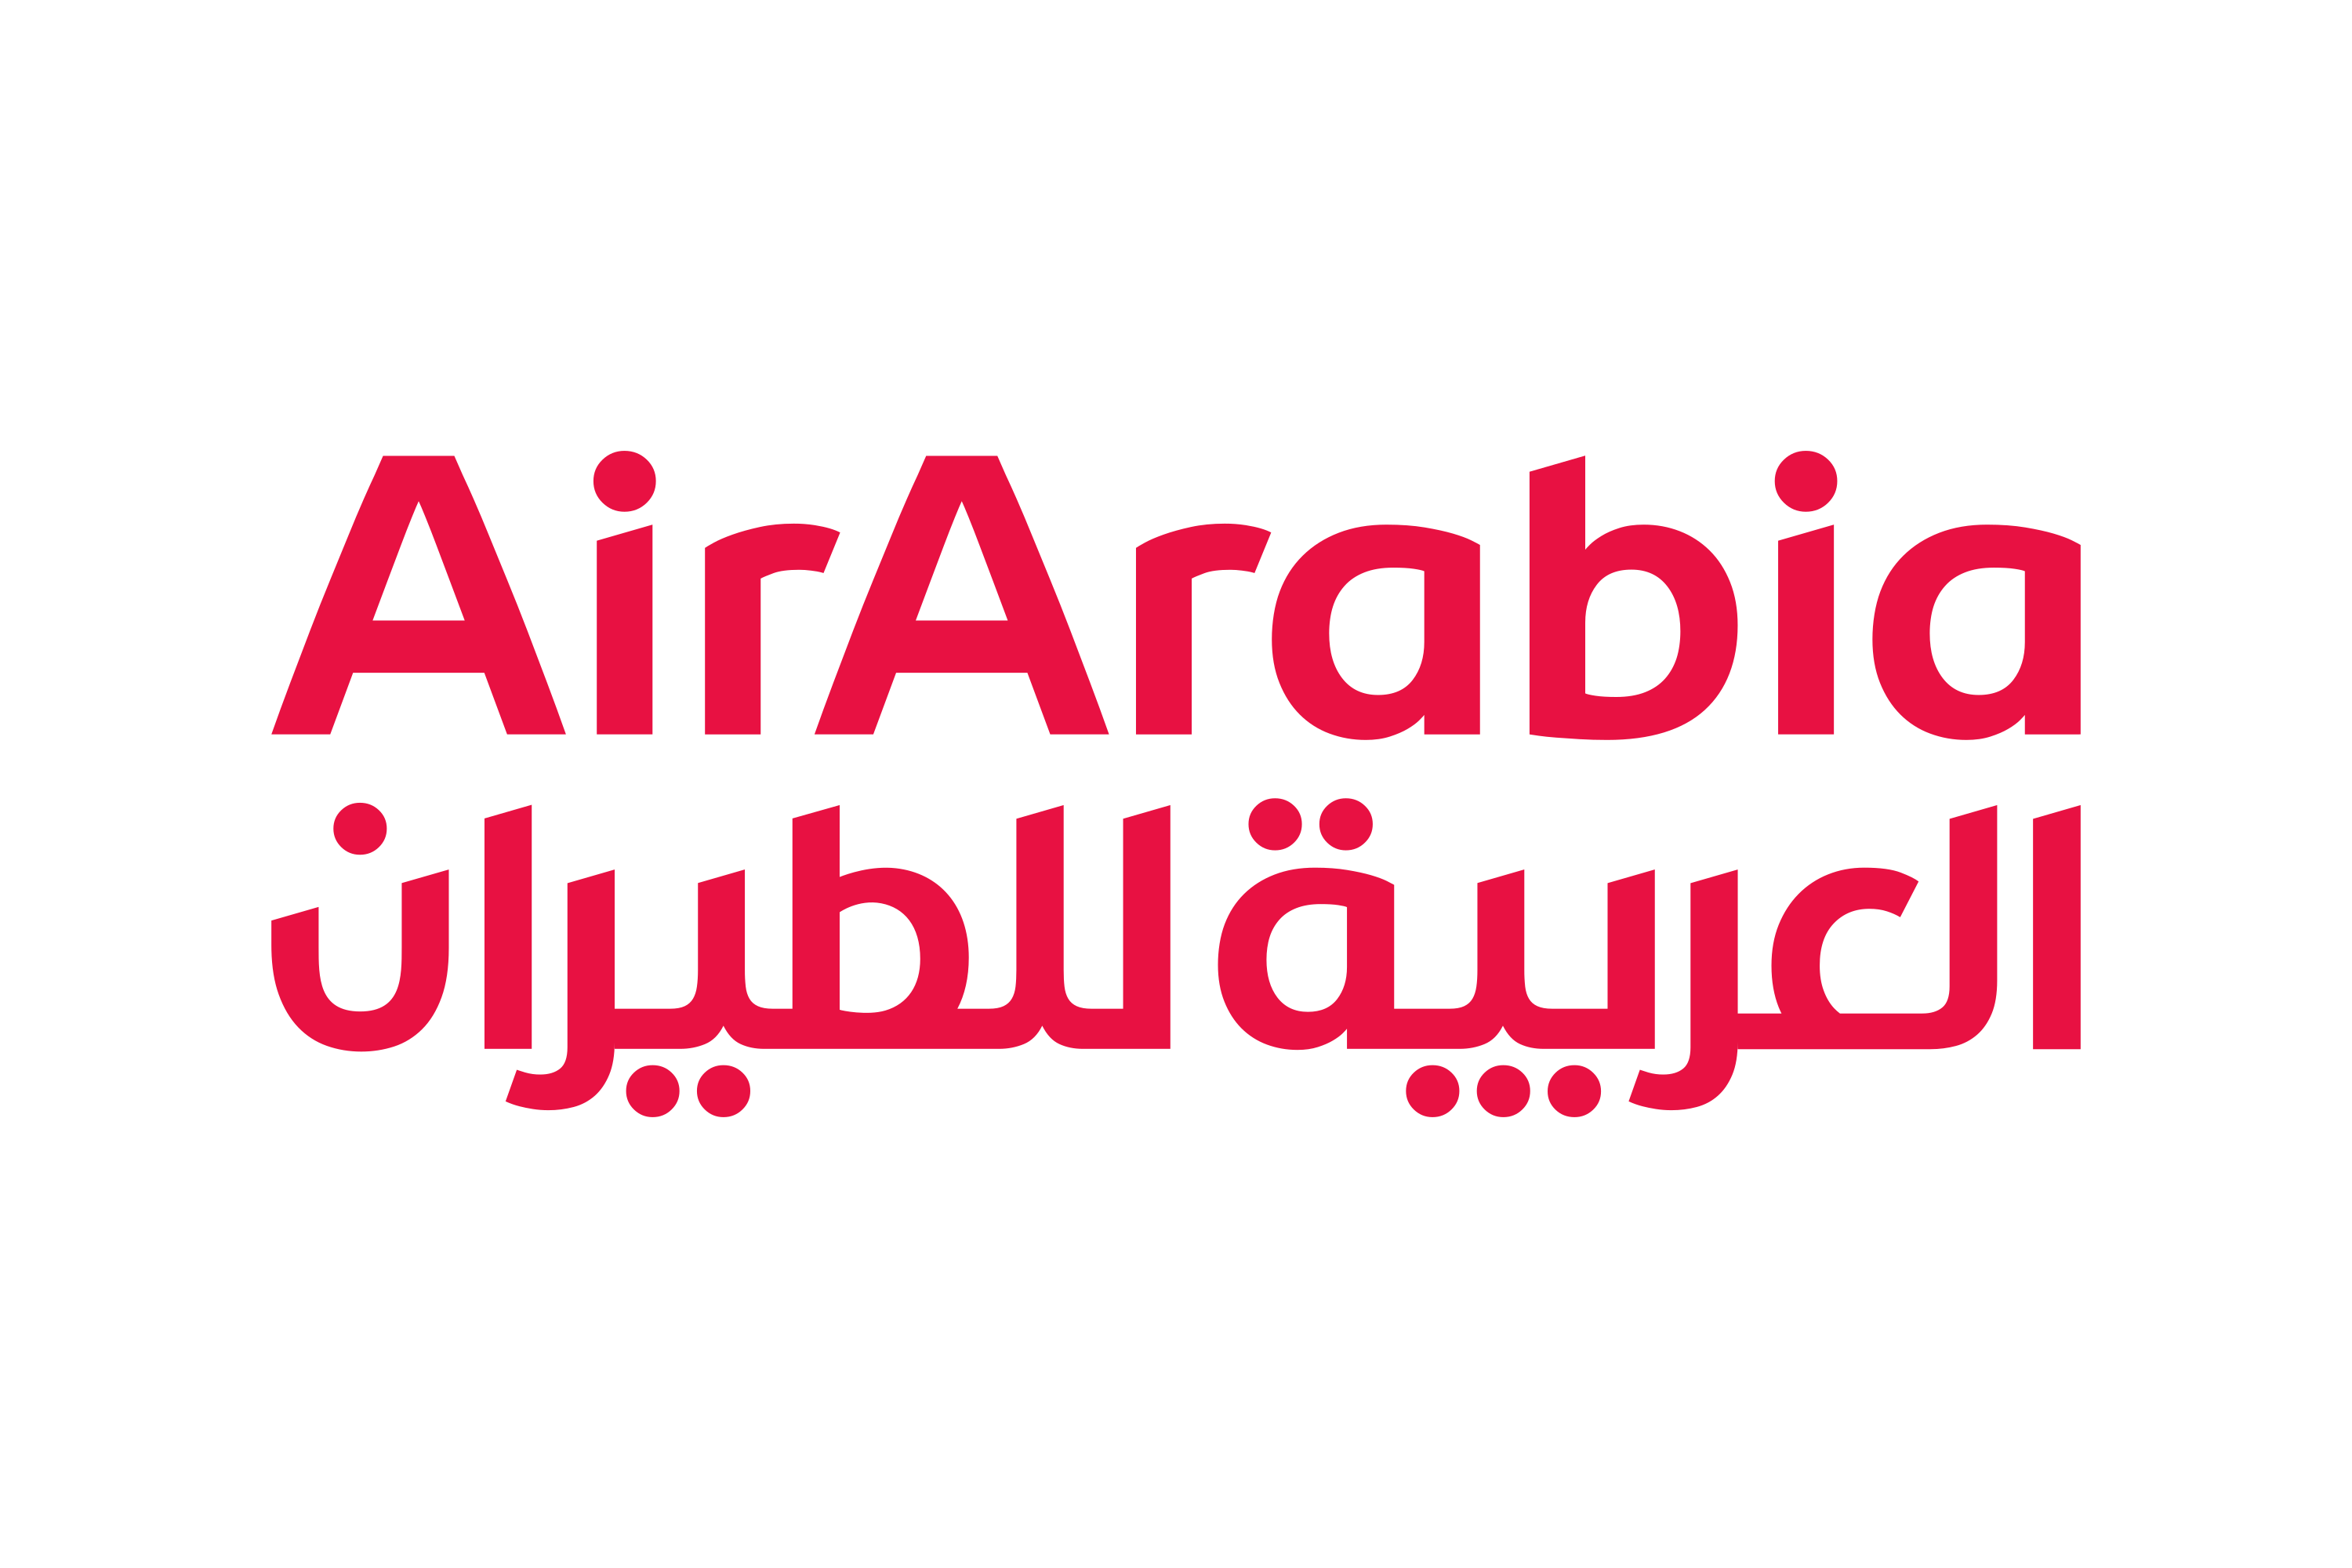 Download Air Arabia Maroc Logo in SVG Vector or PNG File Format - Logo.wine